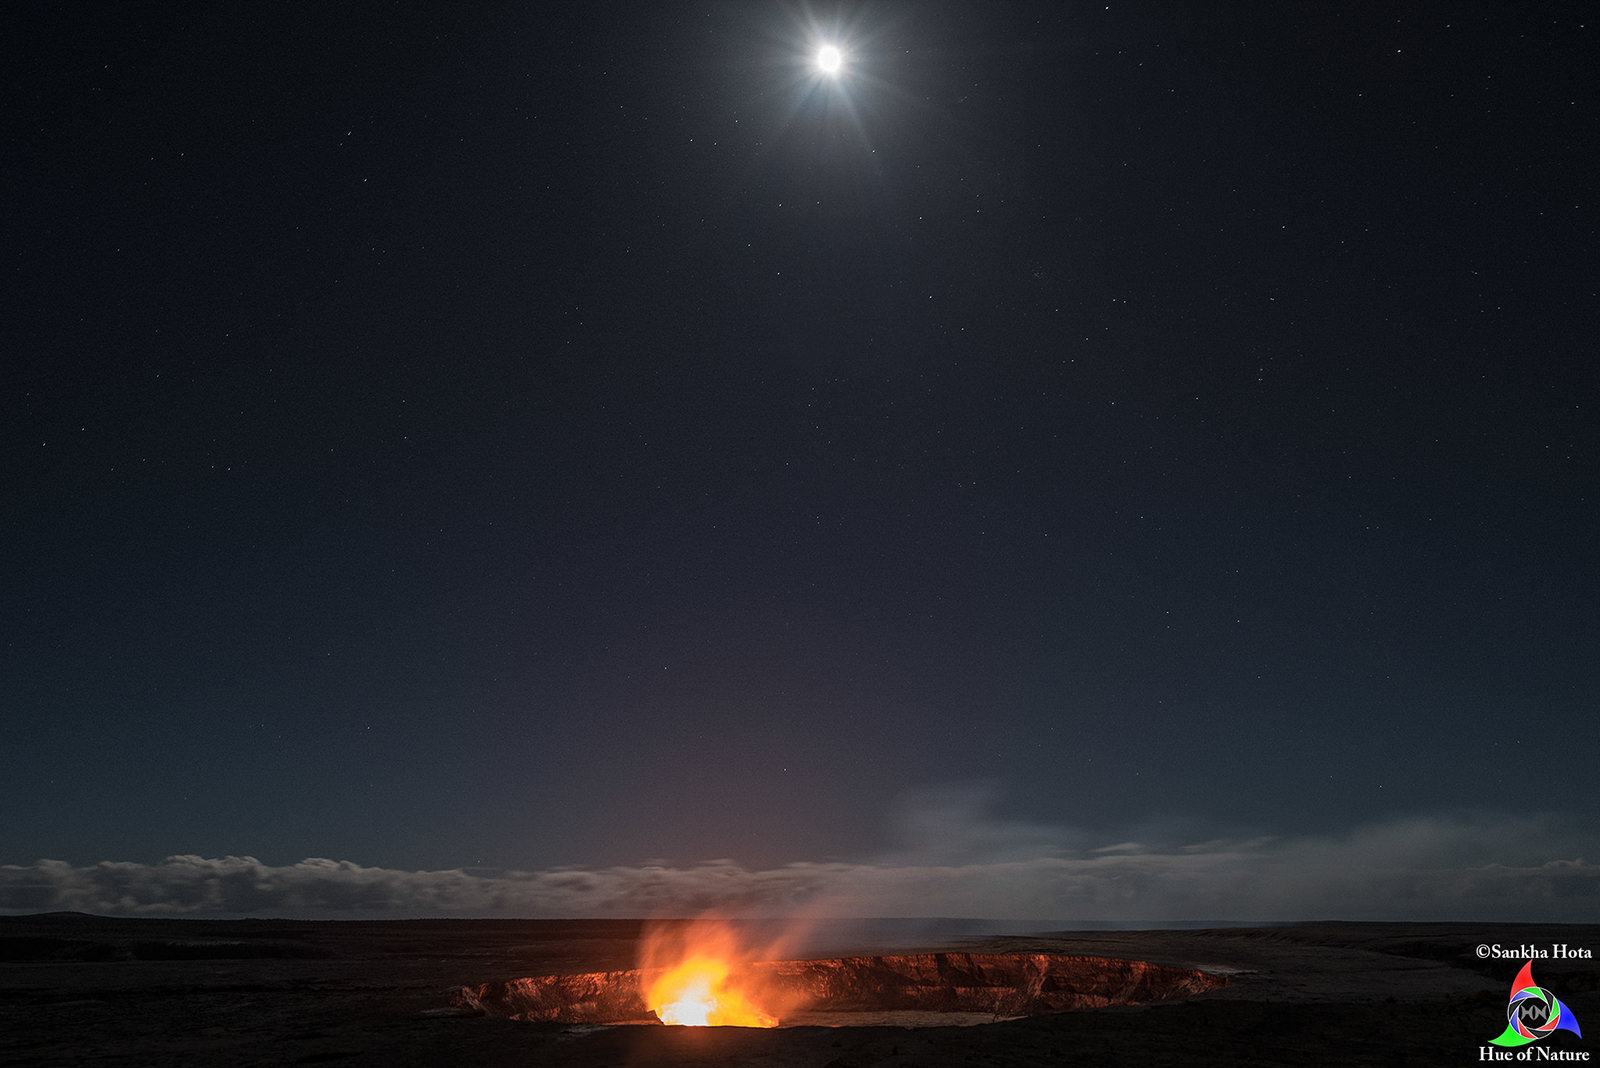 Near full moon brightening up the surroundings of Halema'uma'u crater